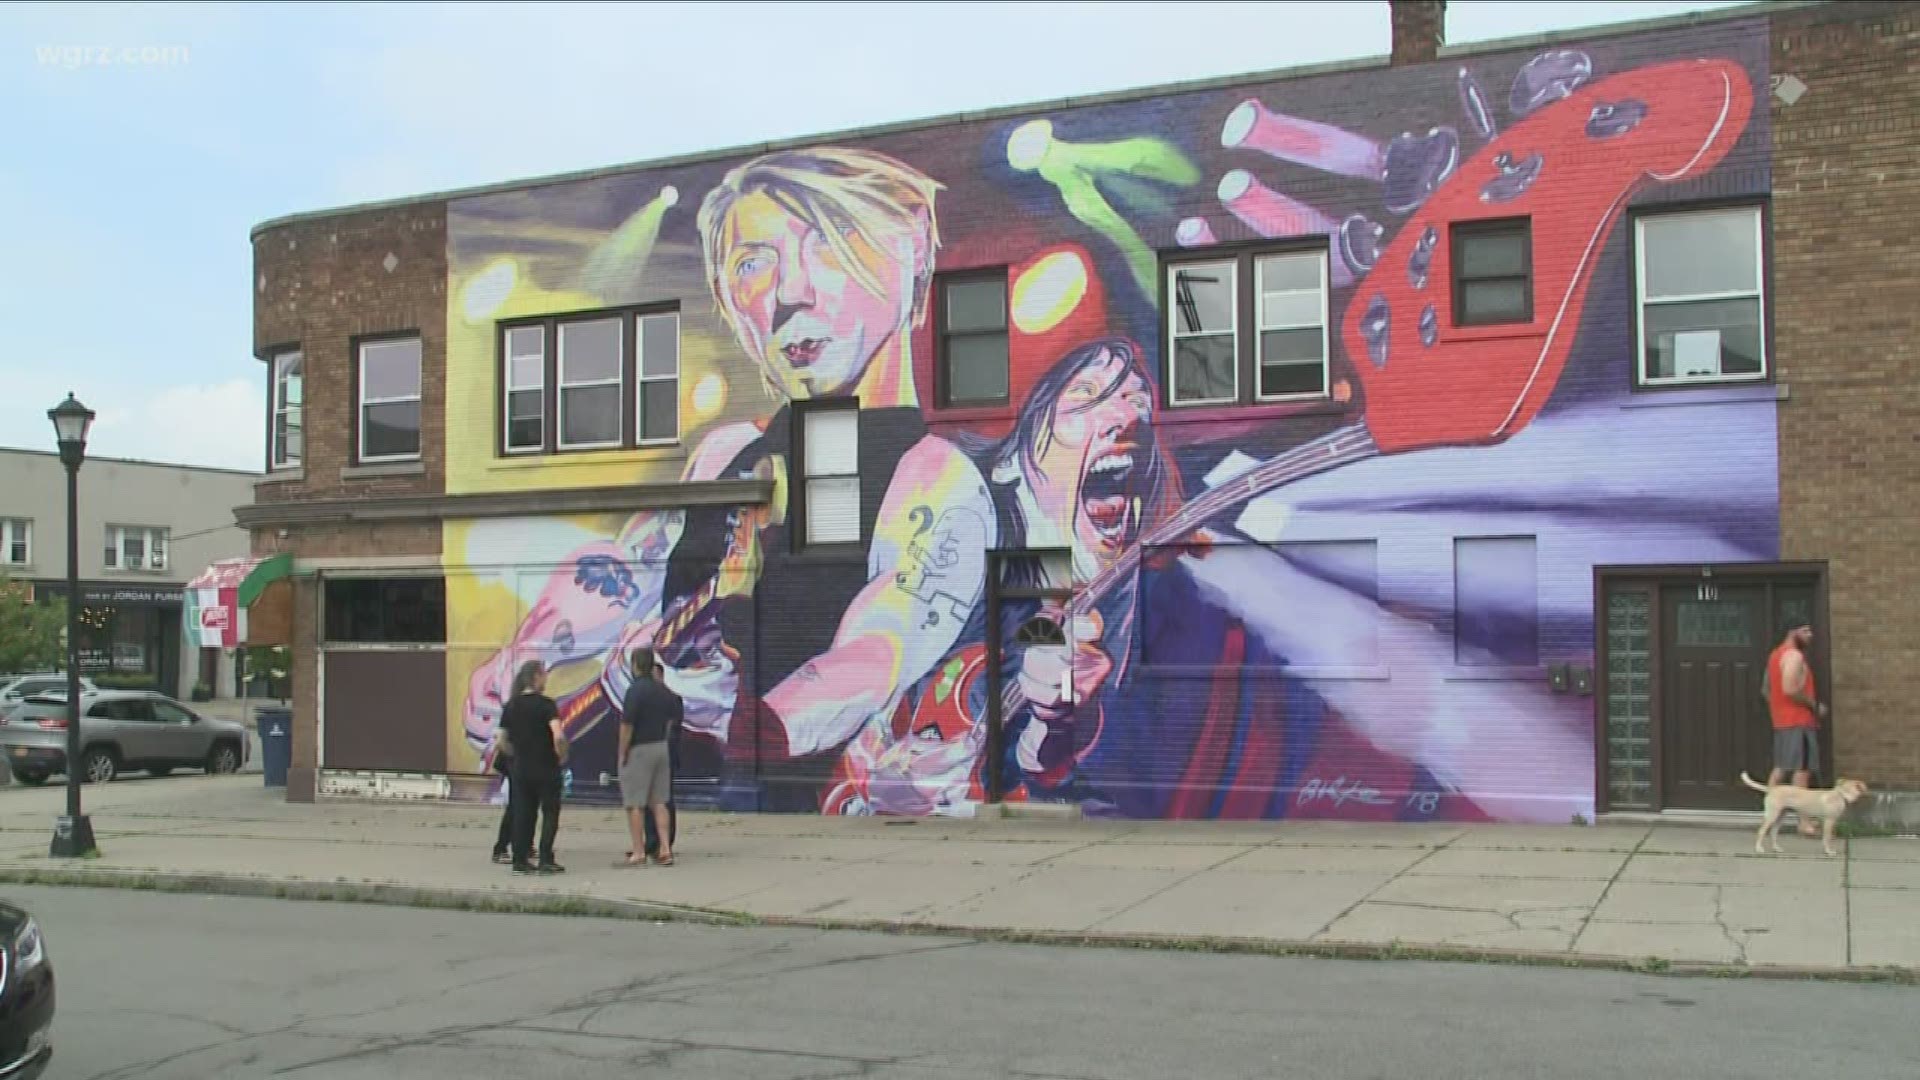 Robby Takac stops by the Goo Goo Dolls mural